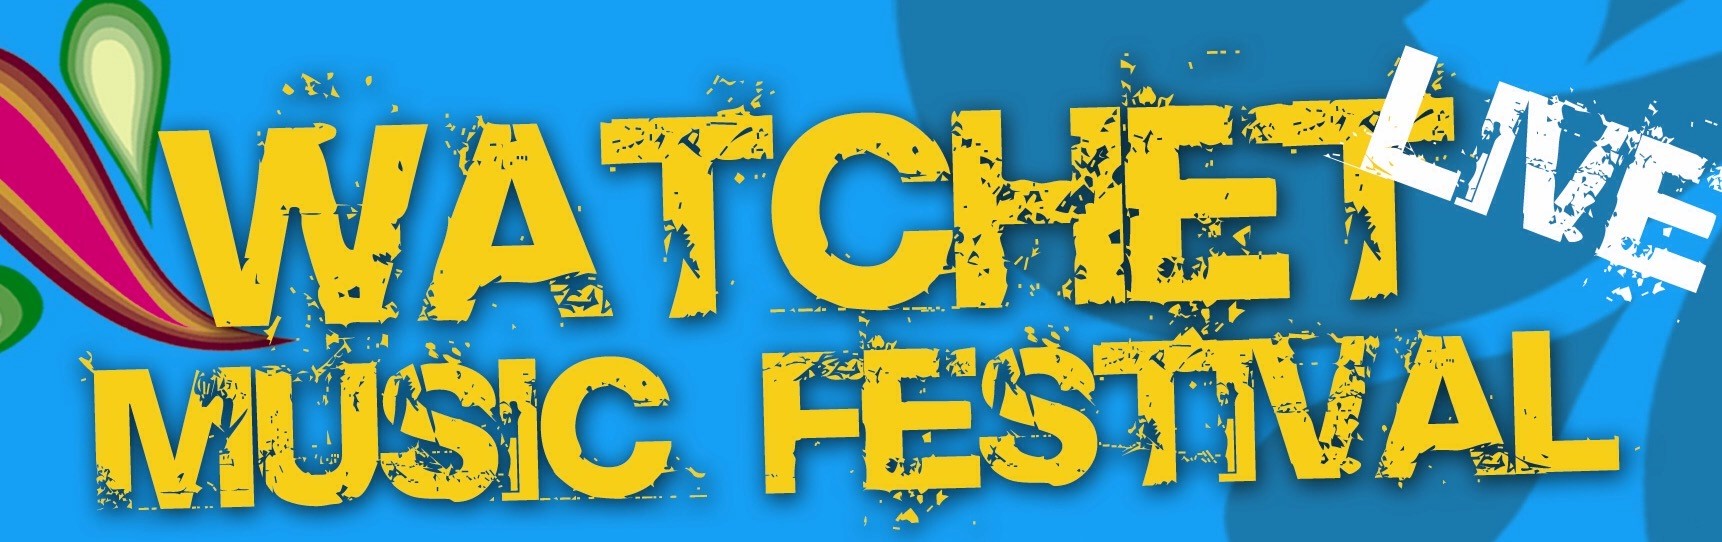 Watchet music festival